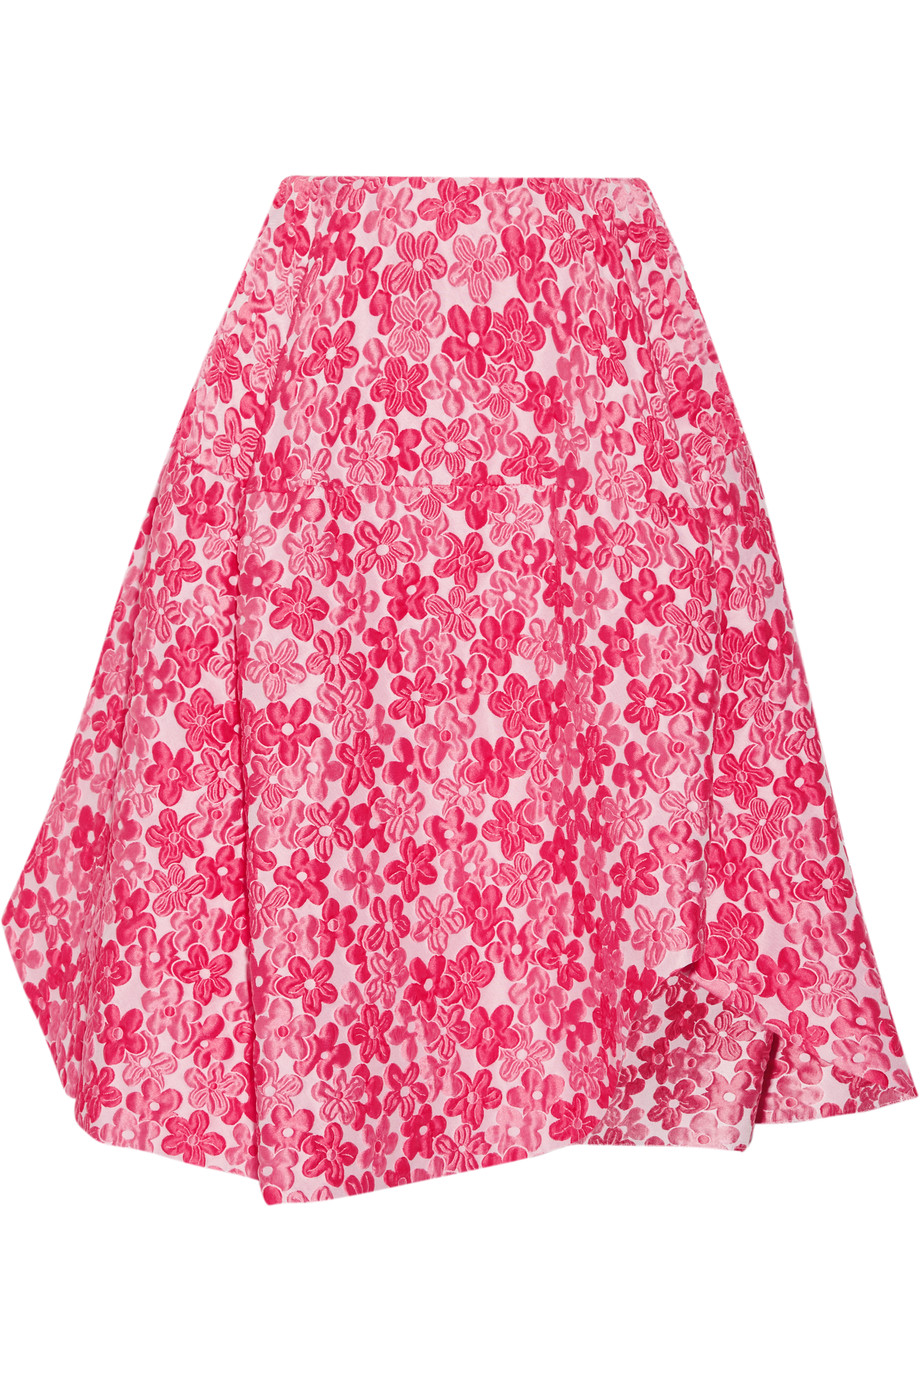 Simone Rocha Asymmetric Floral Cloqué Skirt